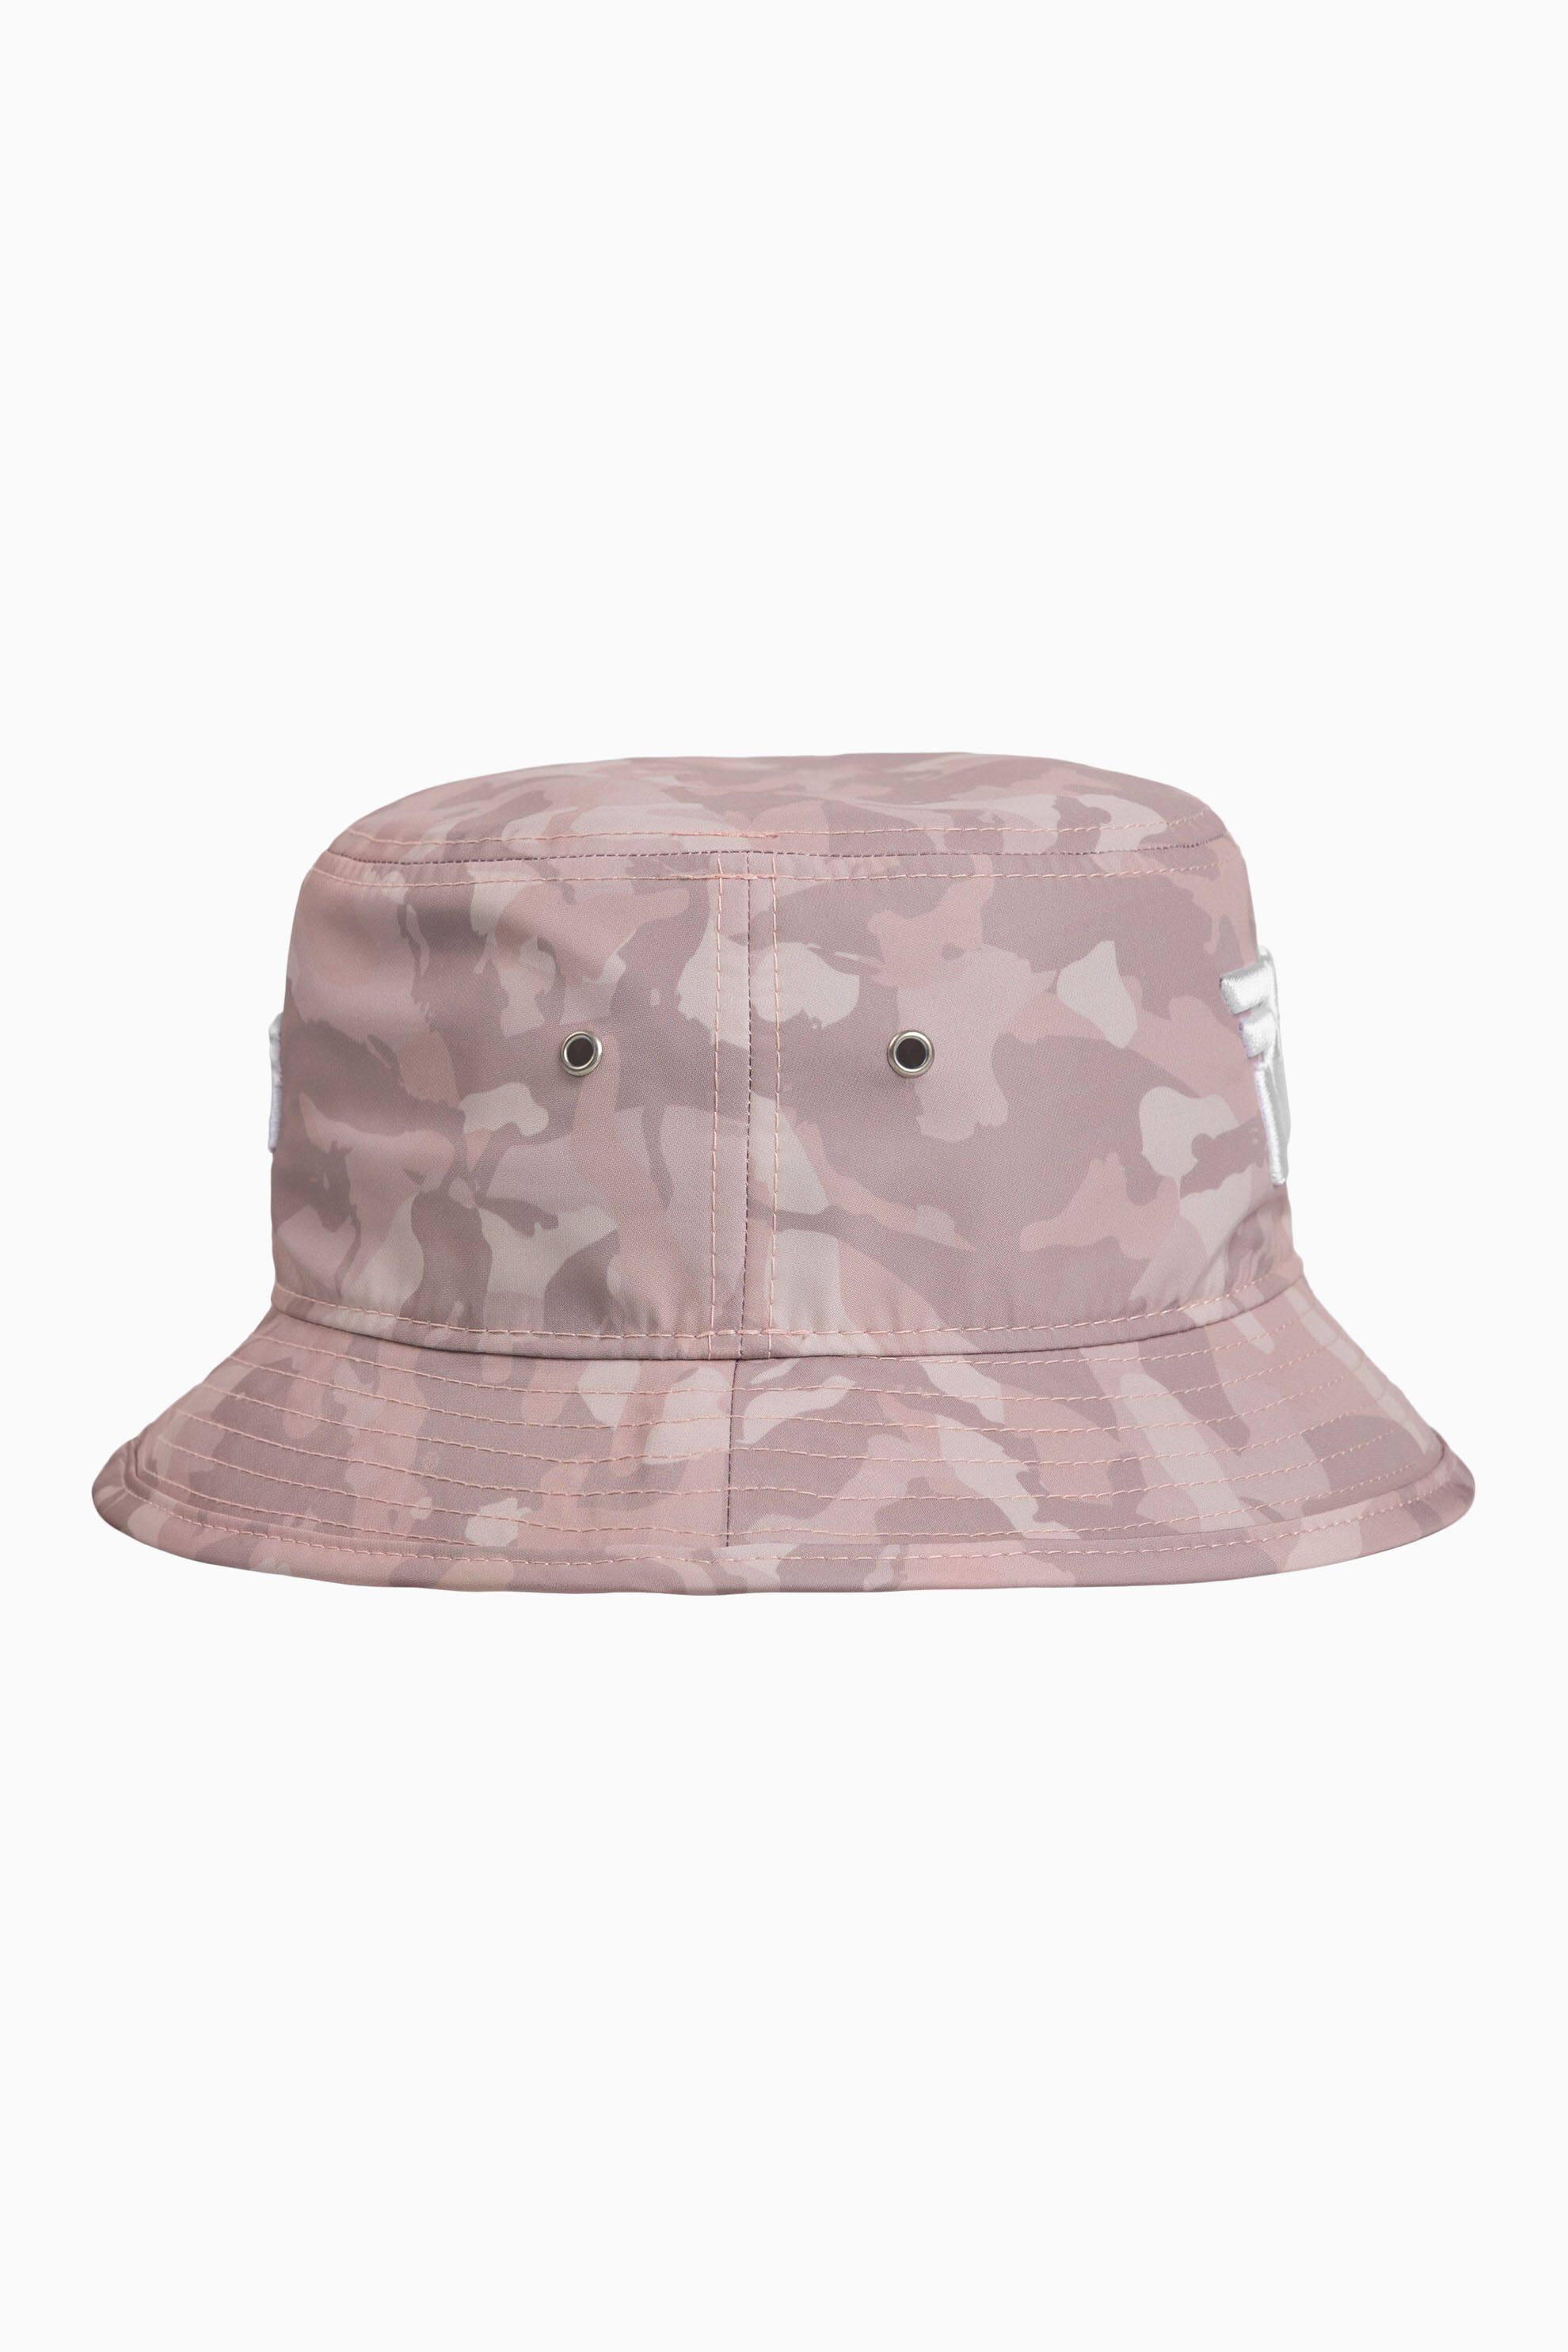 Fairway Camo Blush Bucket Hat | Shop the Highest Quality Golf 